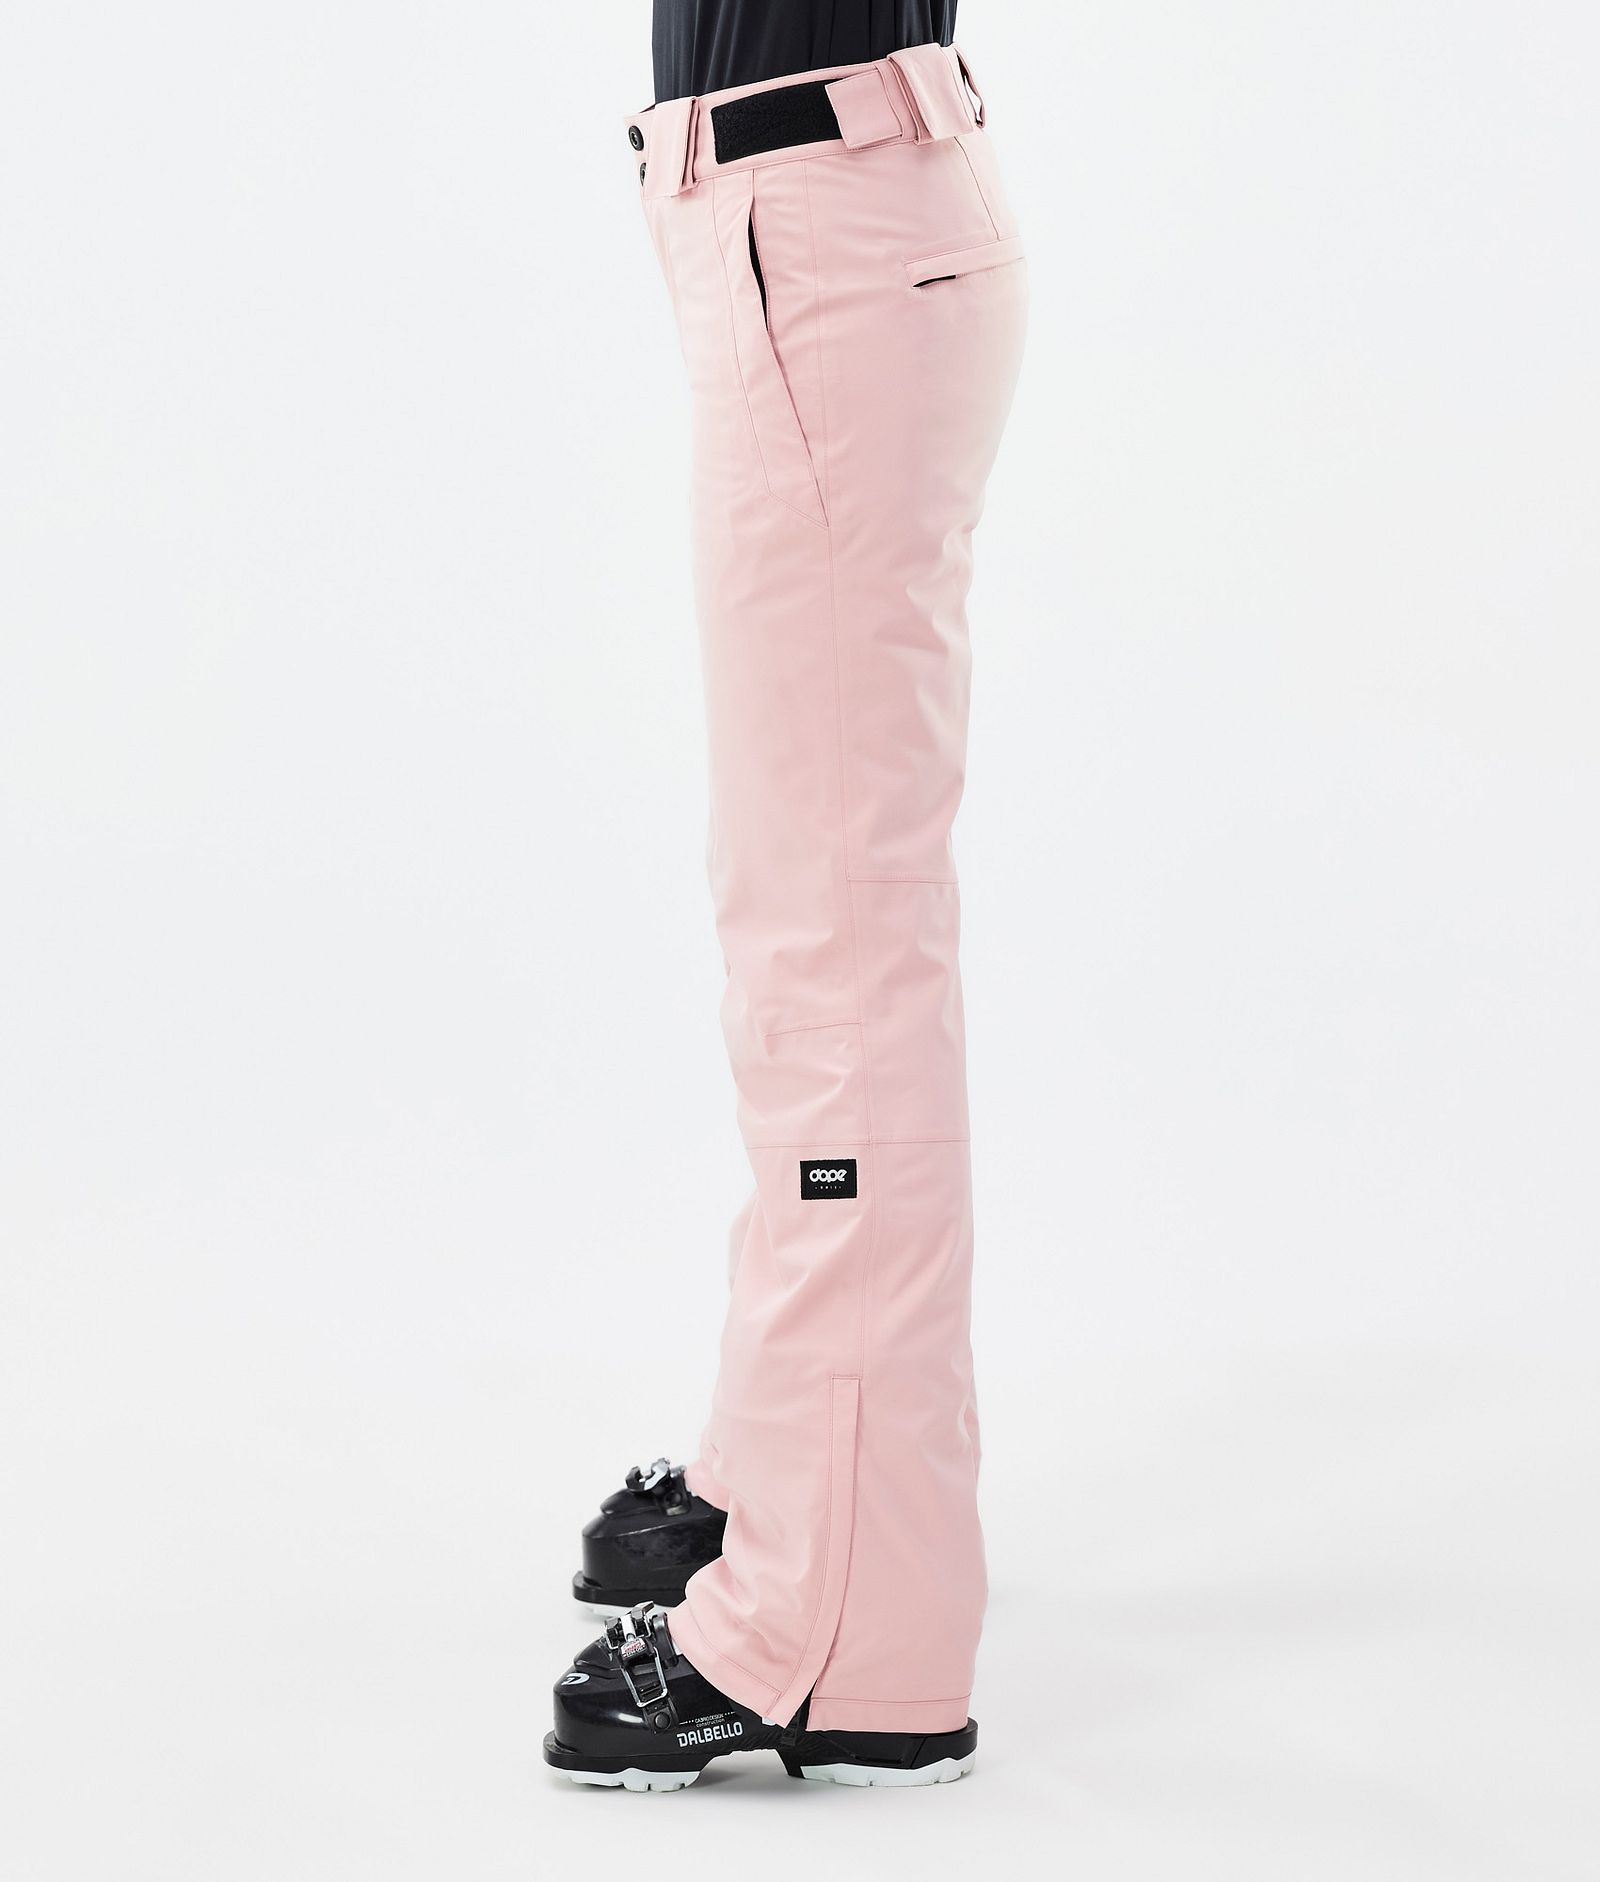 Con W Pantalones Esquí Mujer Soft Pink